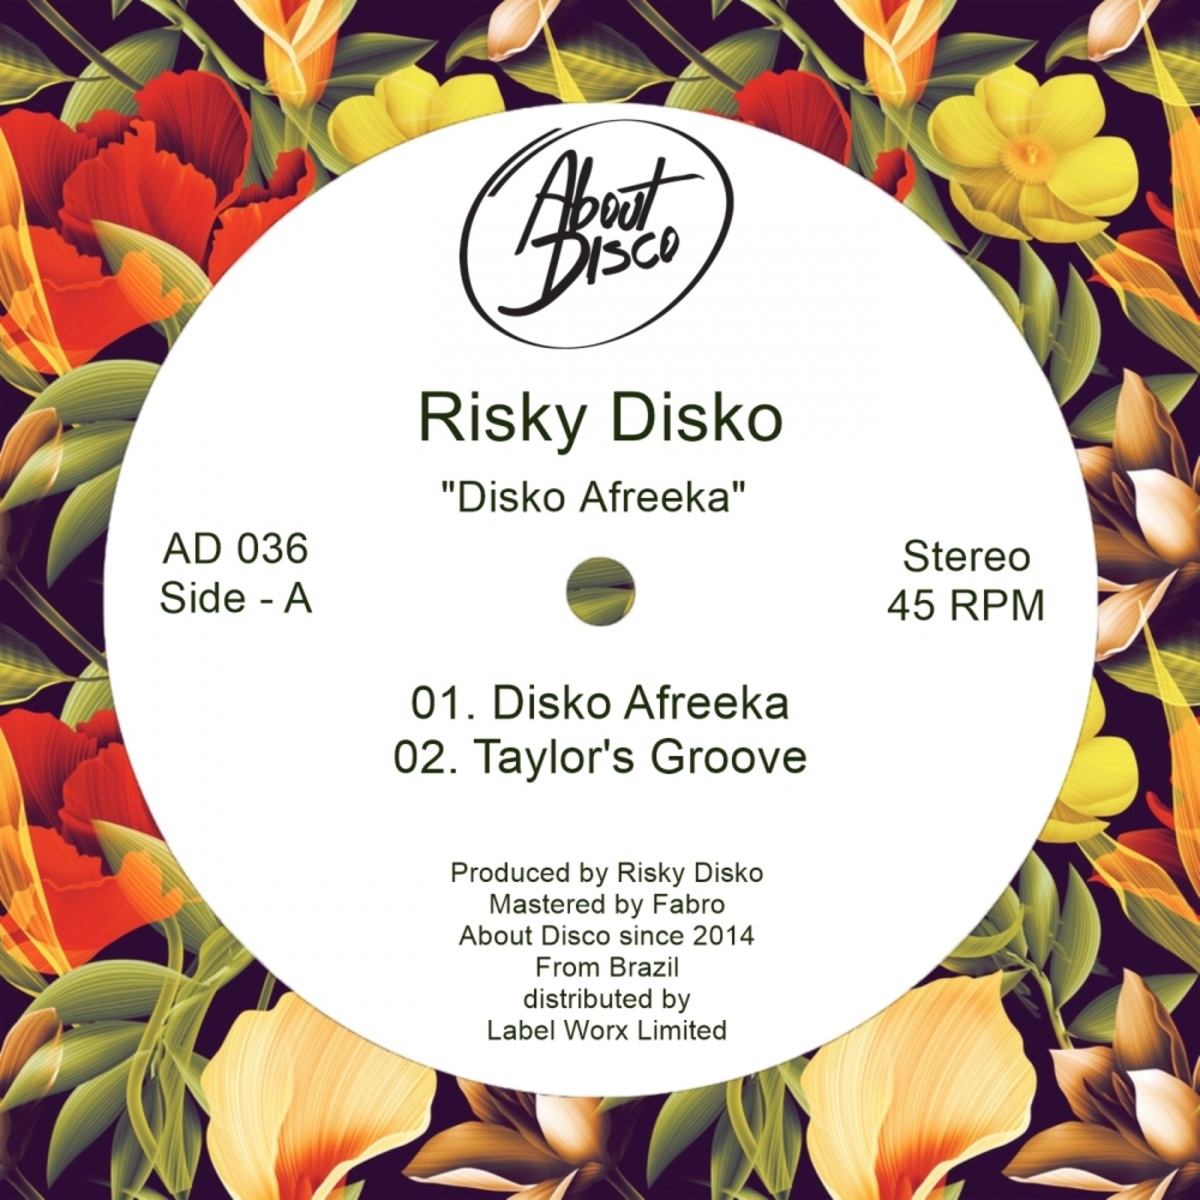 Risky Disko - Disko Afreeka / About Disco Records